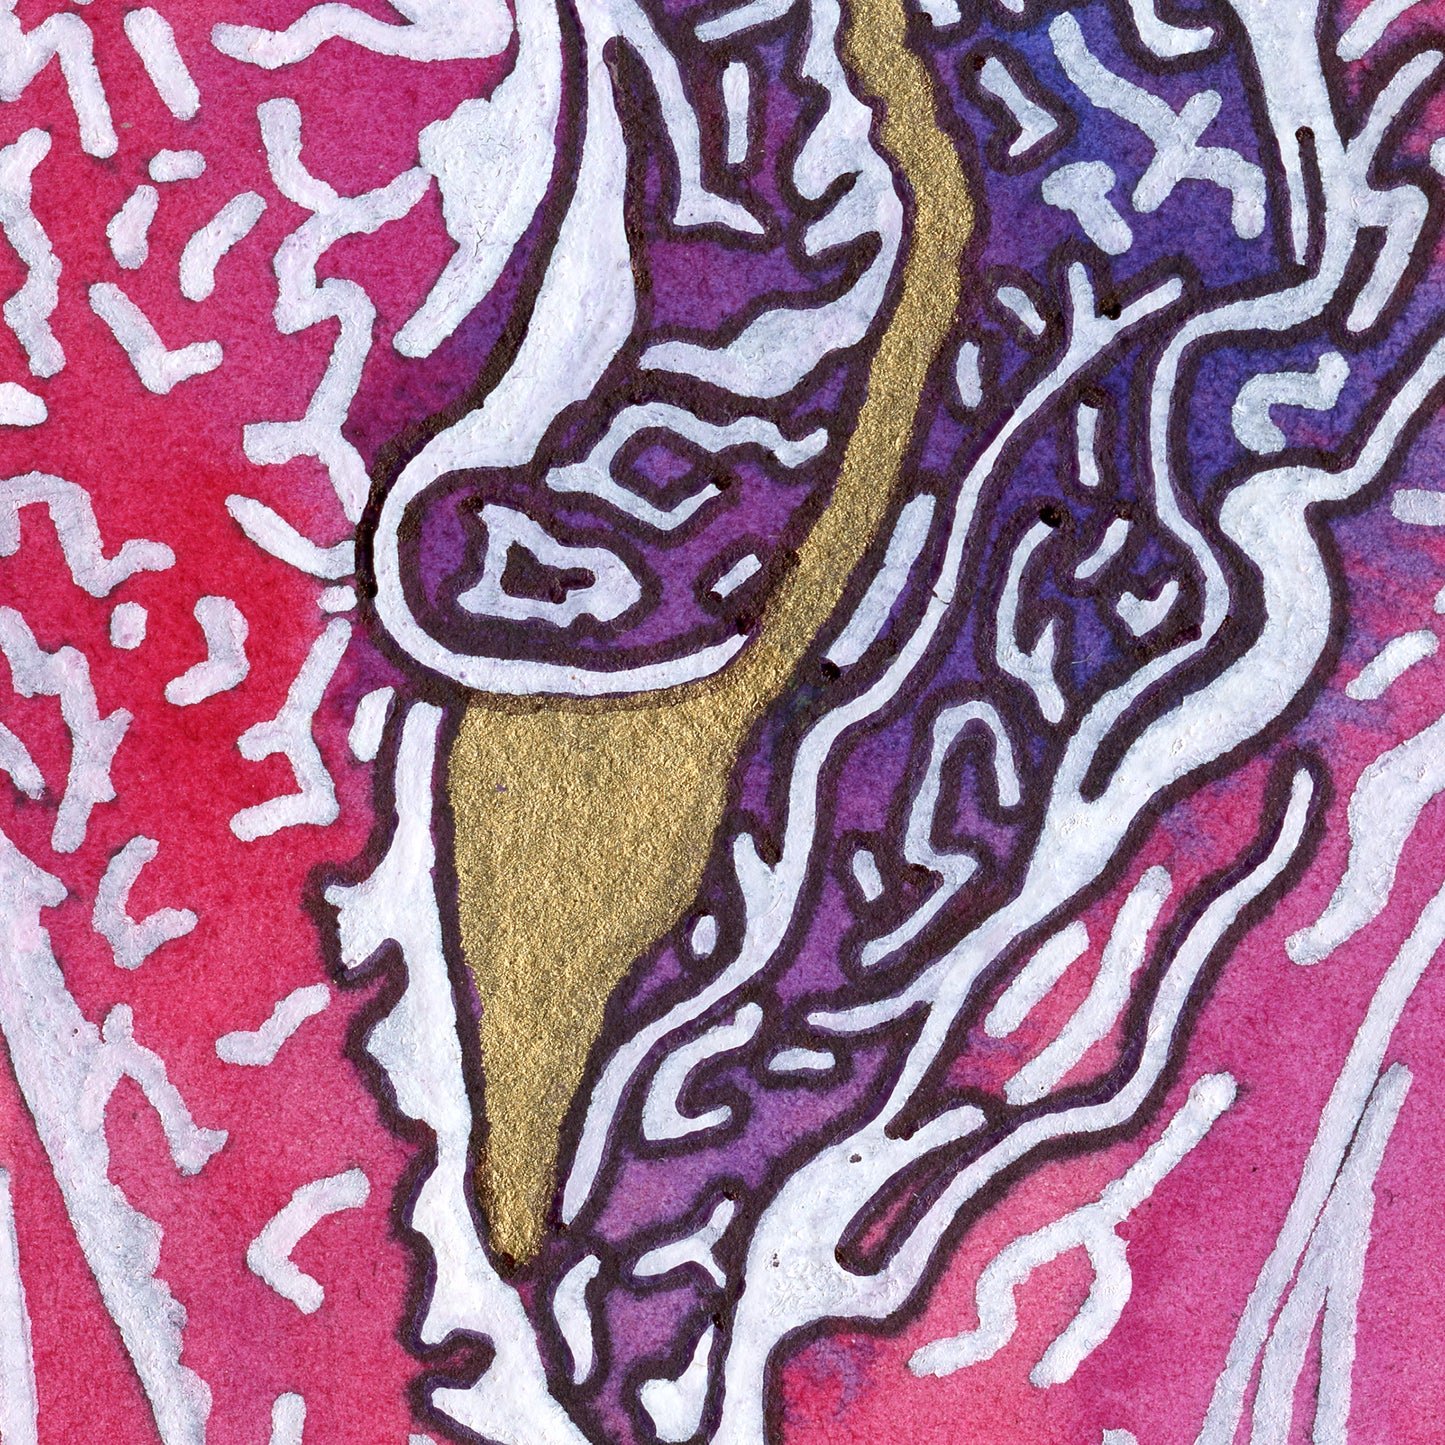 Vibrant vulva art print.